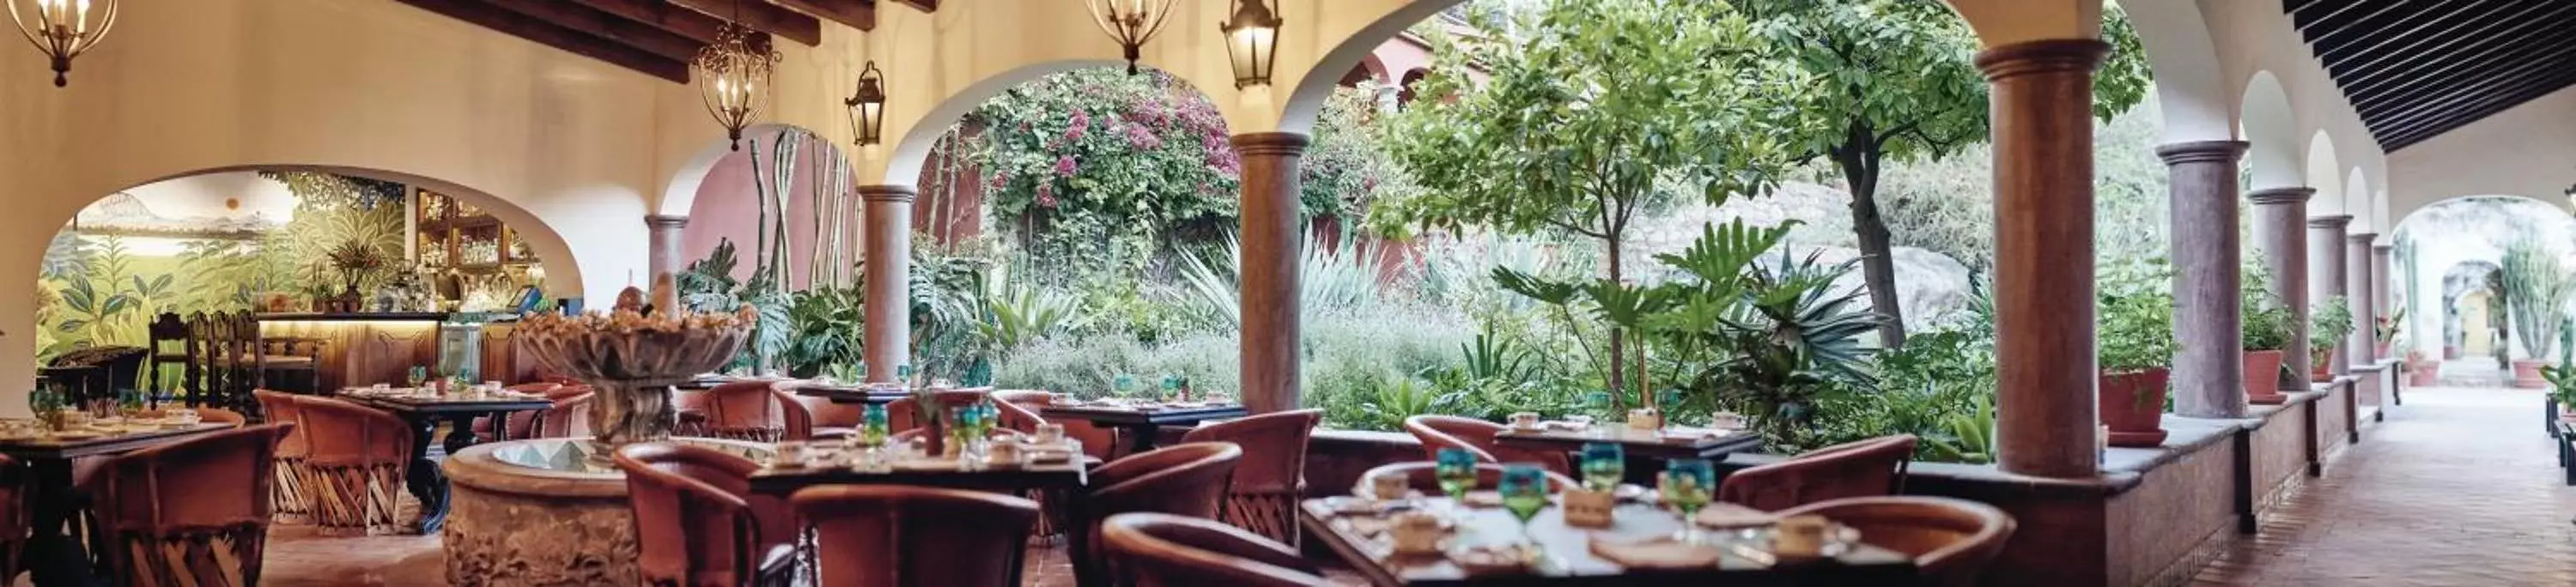 Restaurant/Places to Eat in Casa de Sierra Nevada, A Belmond Hotel, San Miguel de Allende